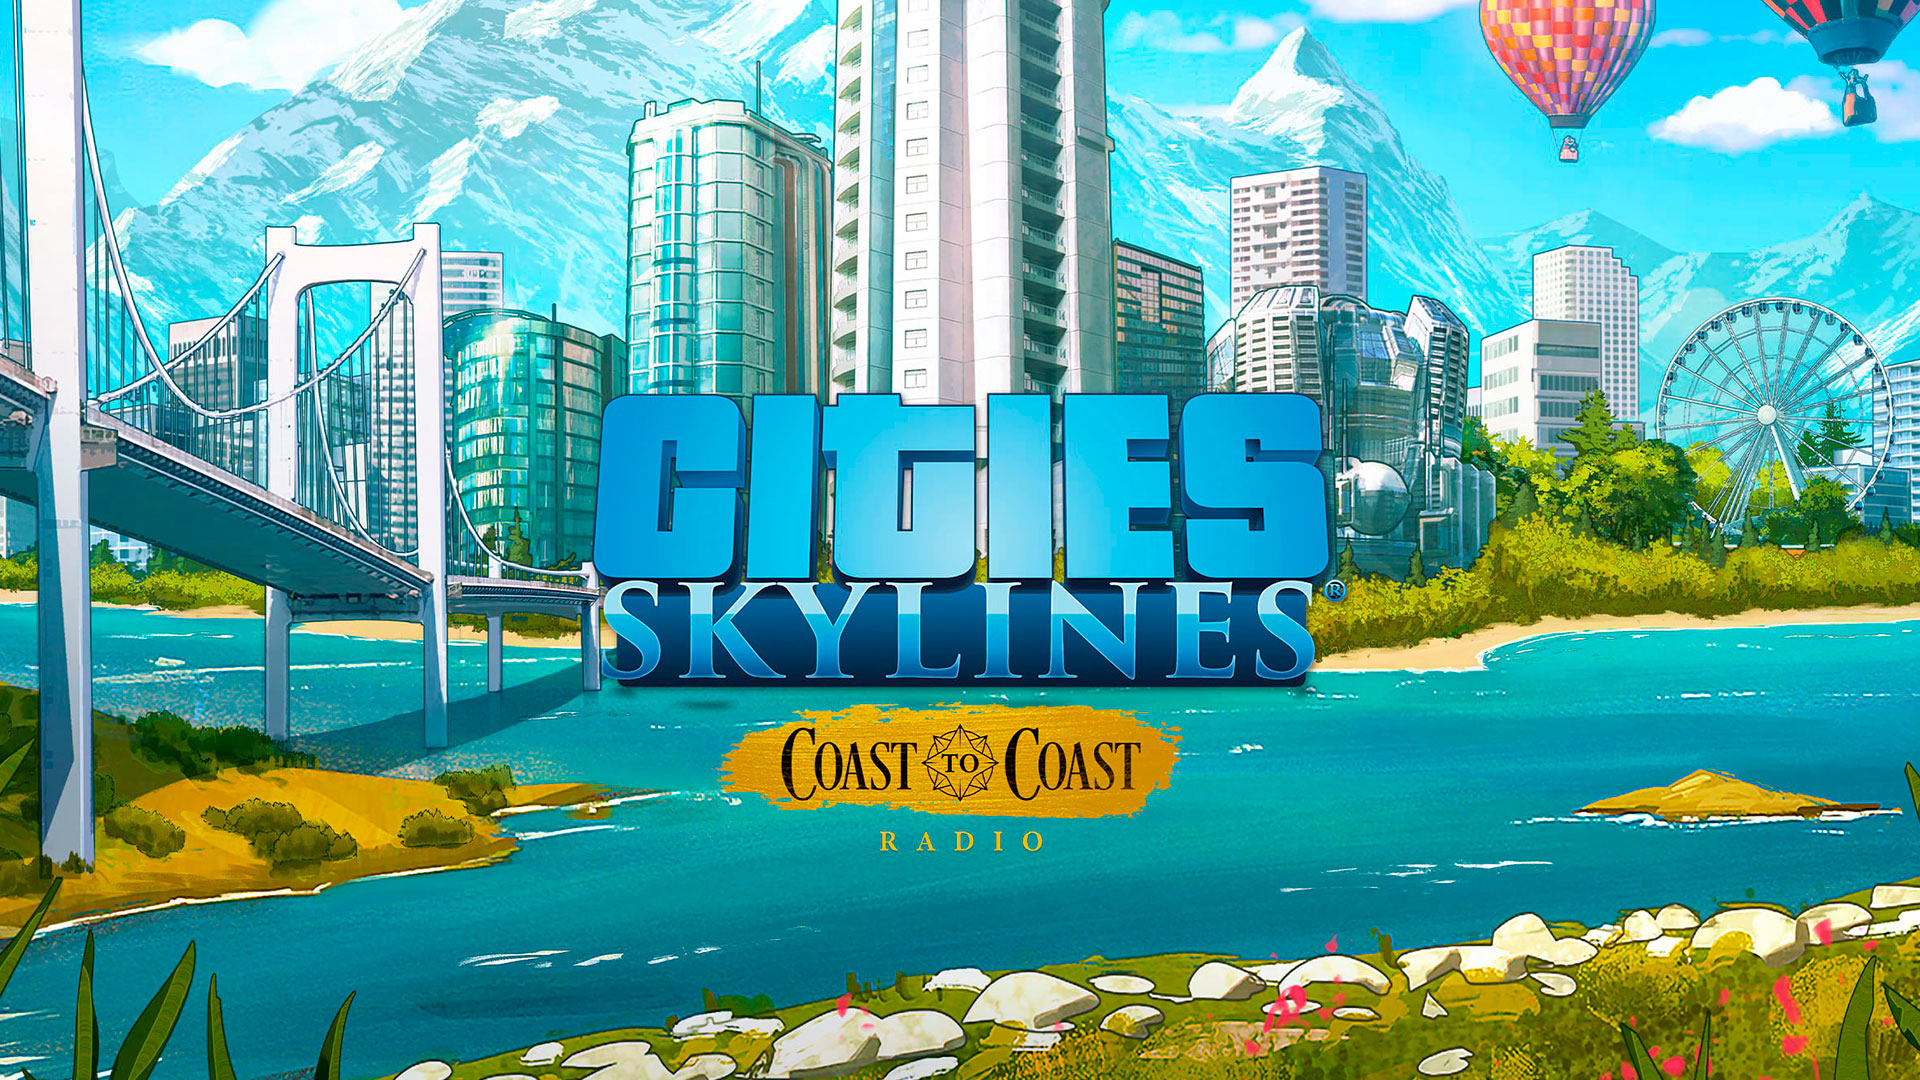 Coast to Coast Radio cities skyline